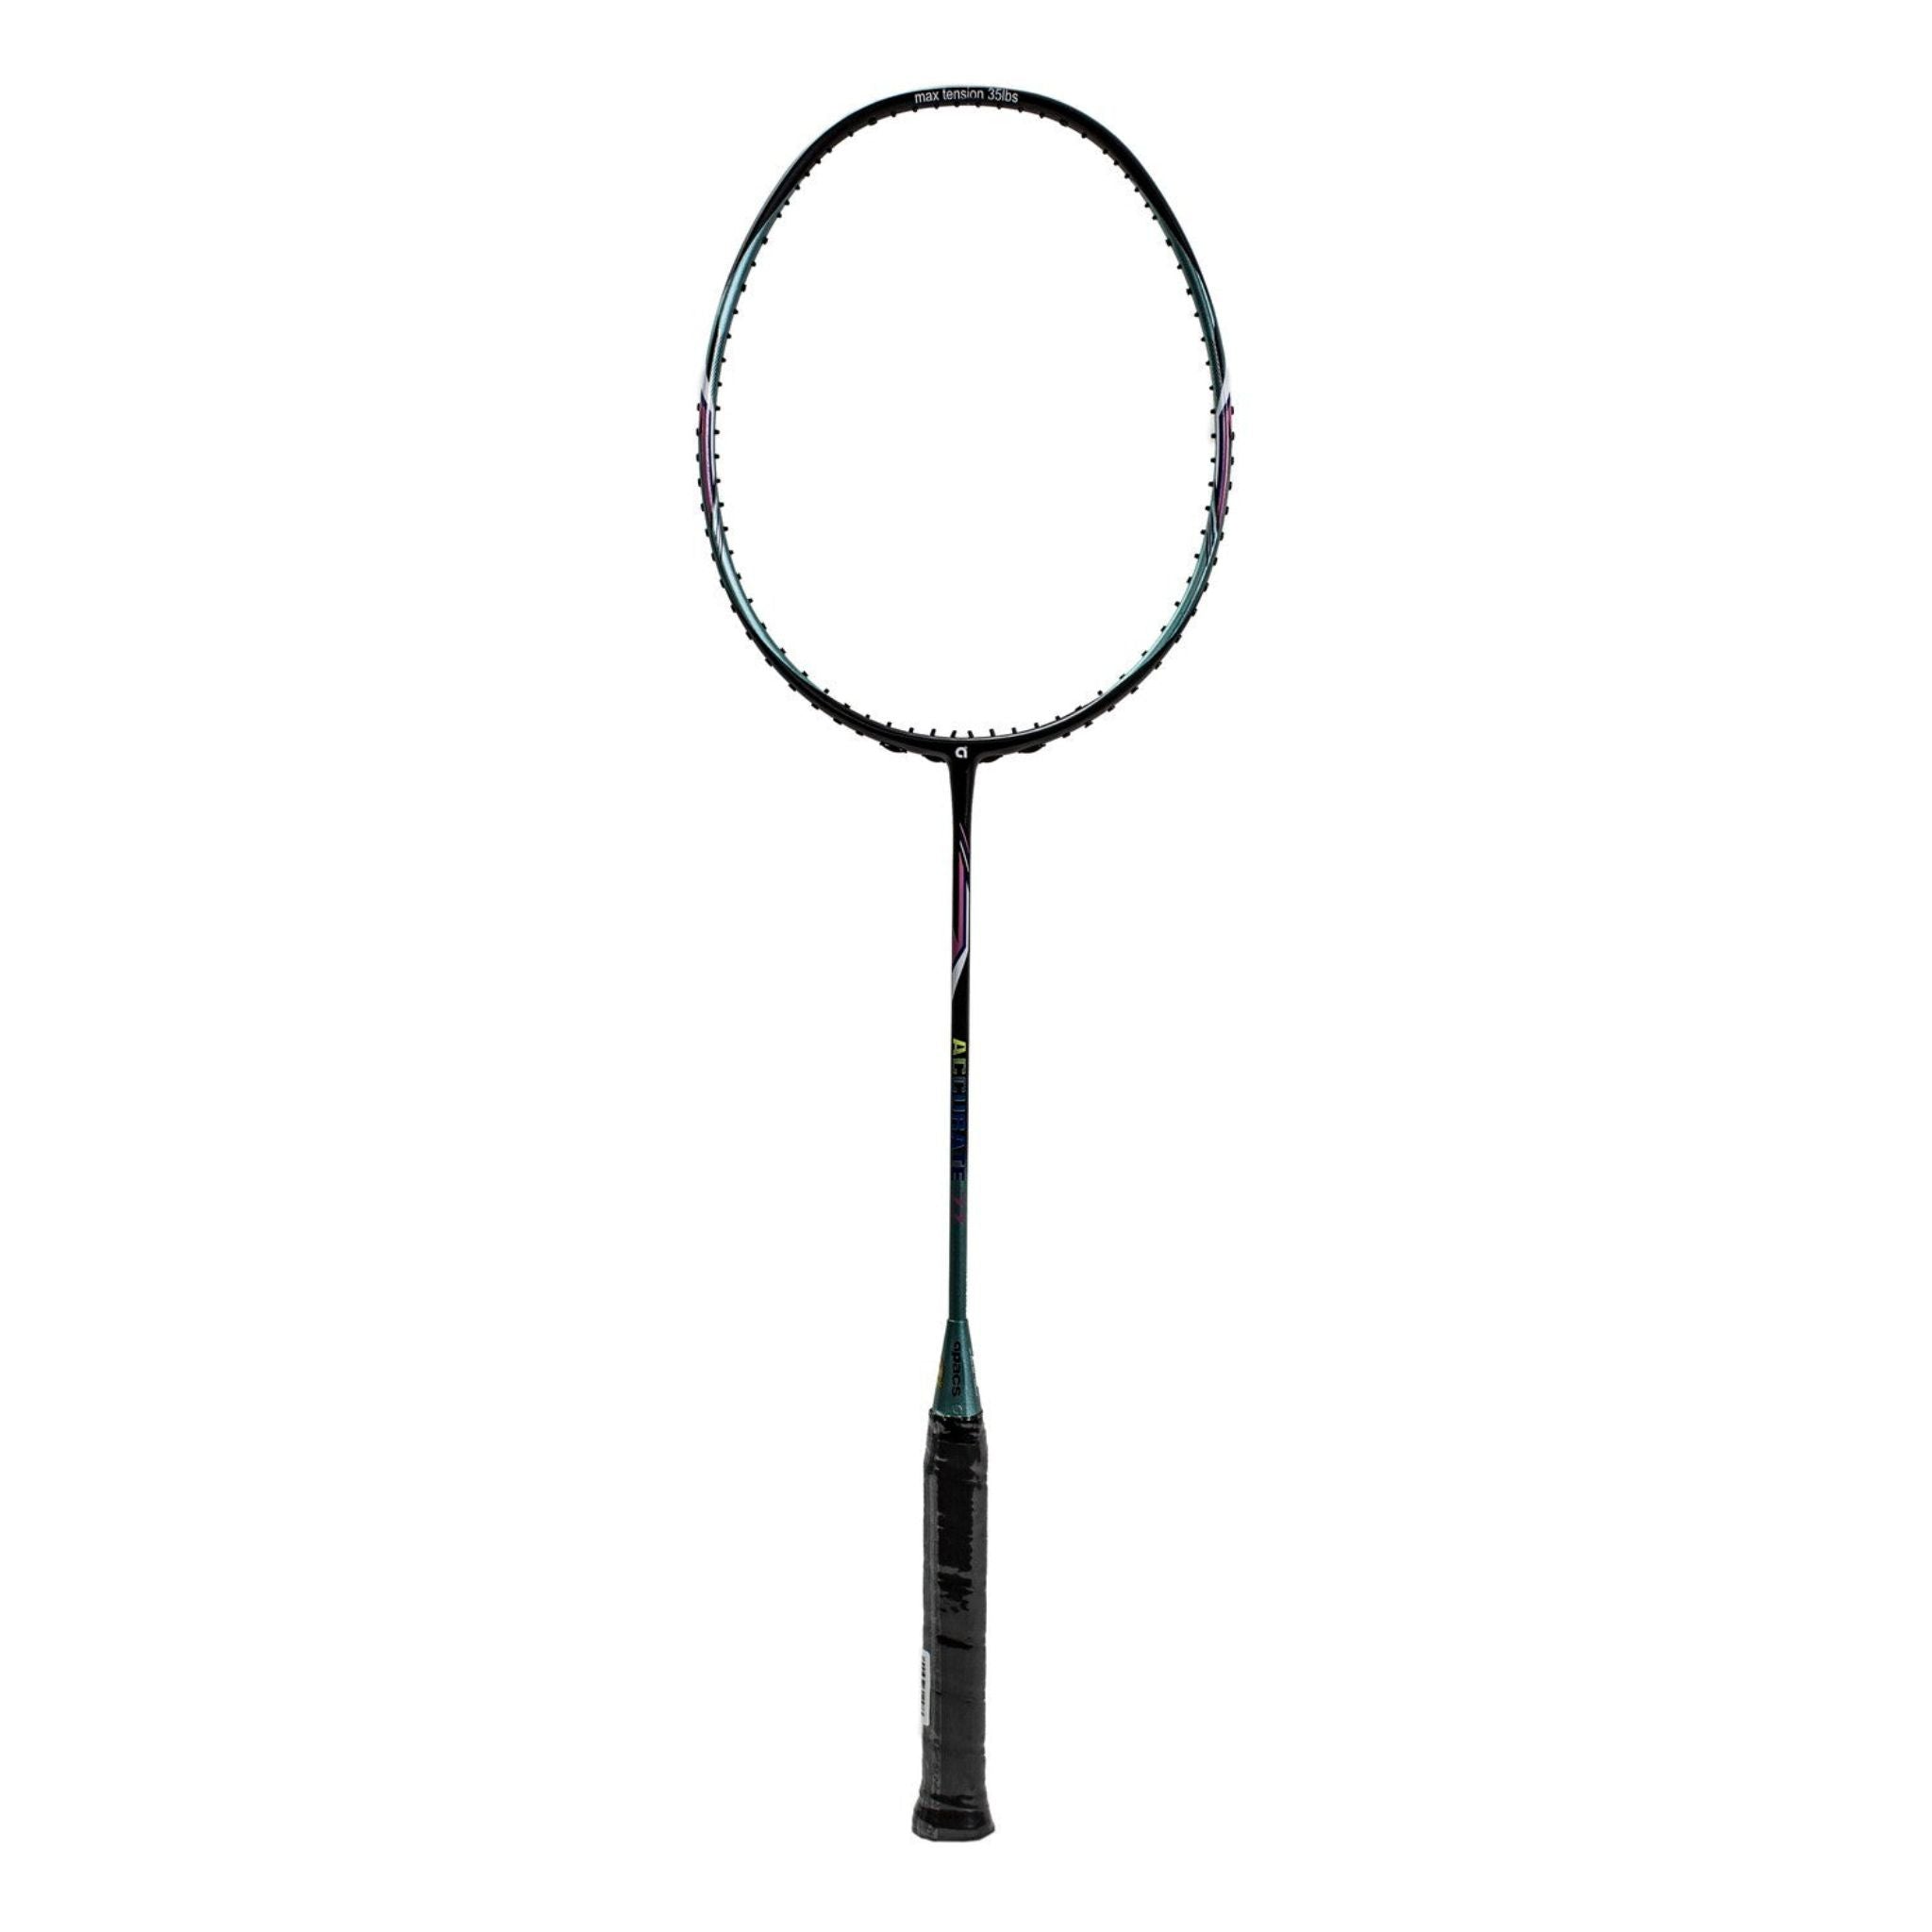 Maxbolt Training Badminton Racket - 120grams